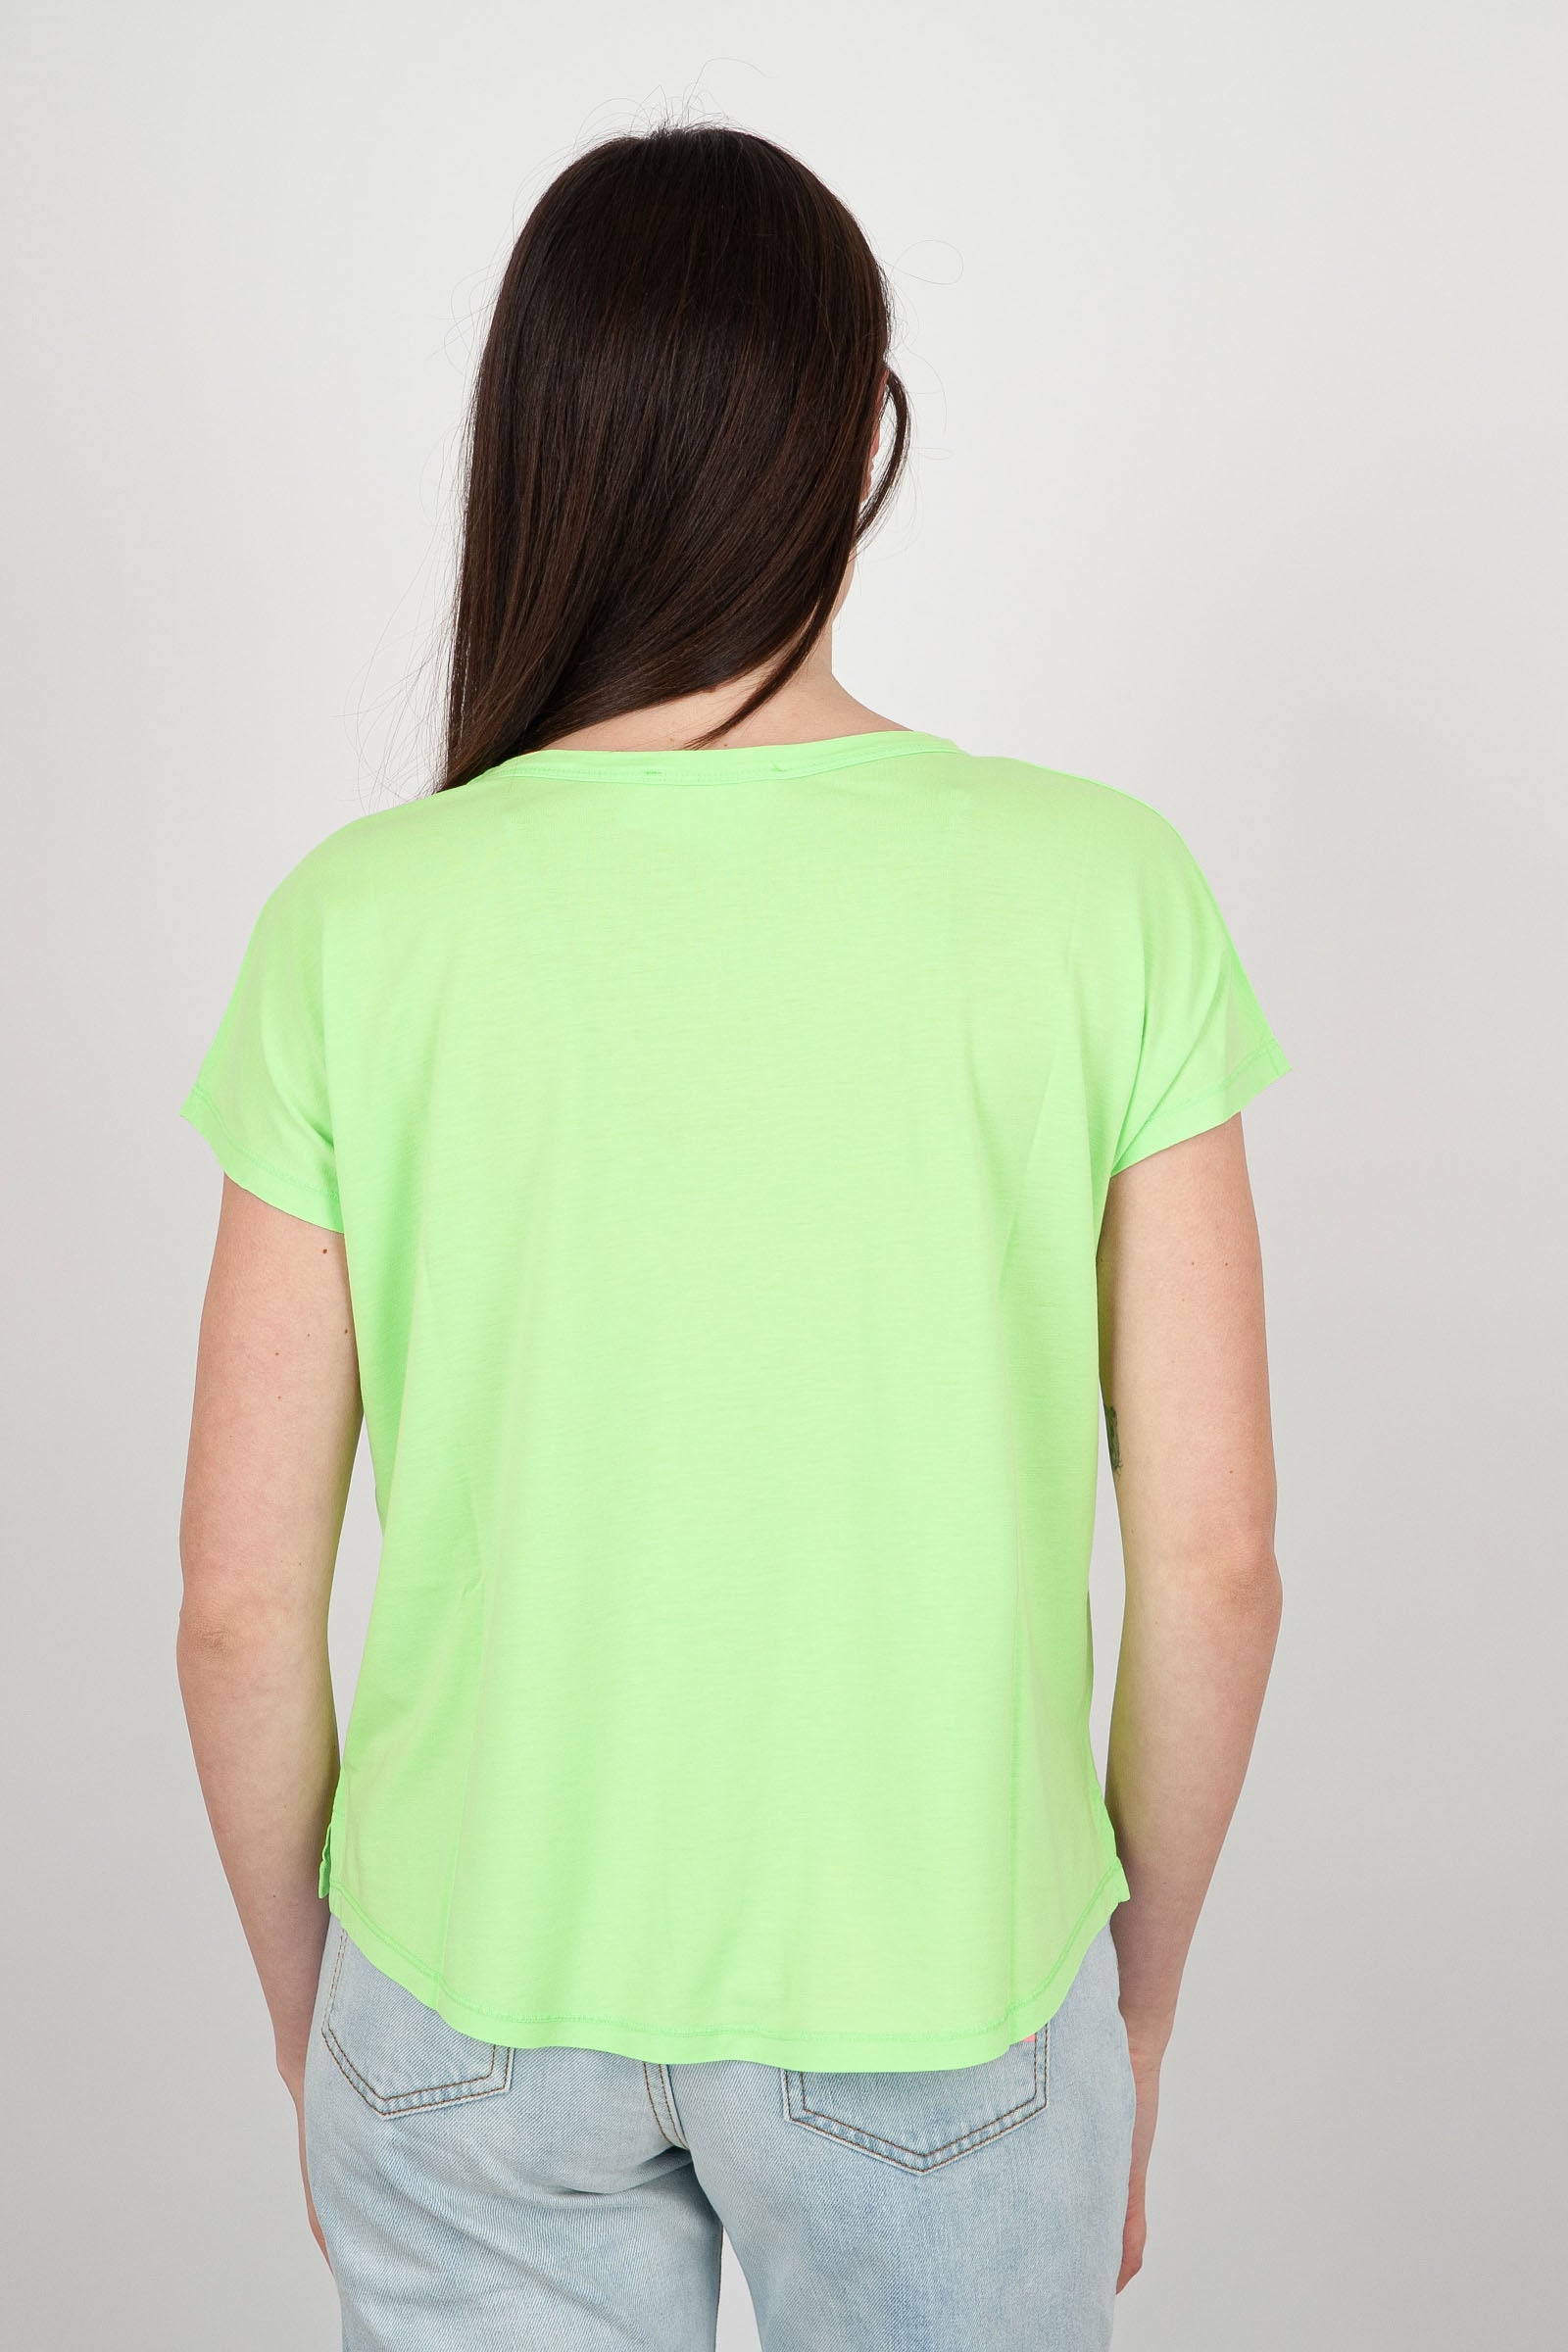 Absolut Cashmere Serra T-Shirt in Fluo Green Cotton - 4